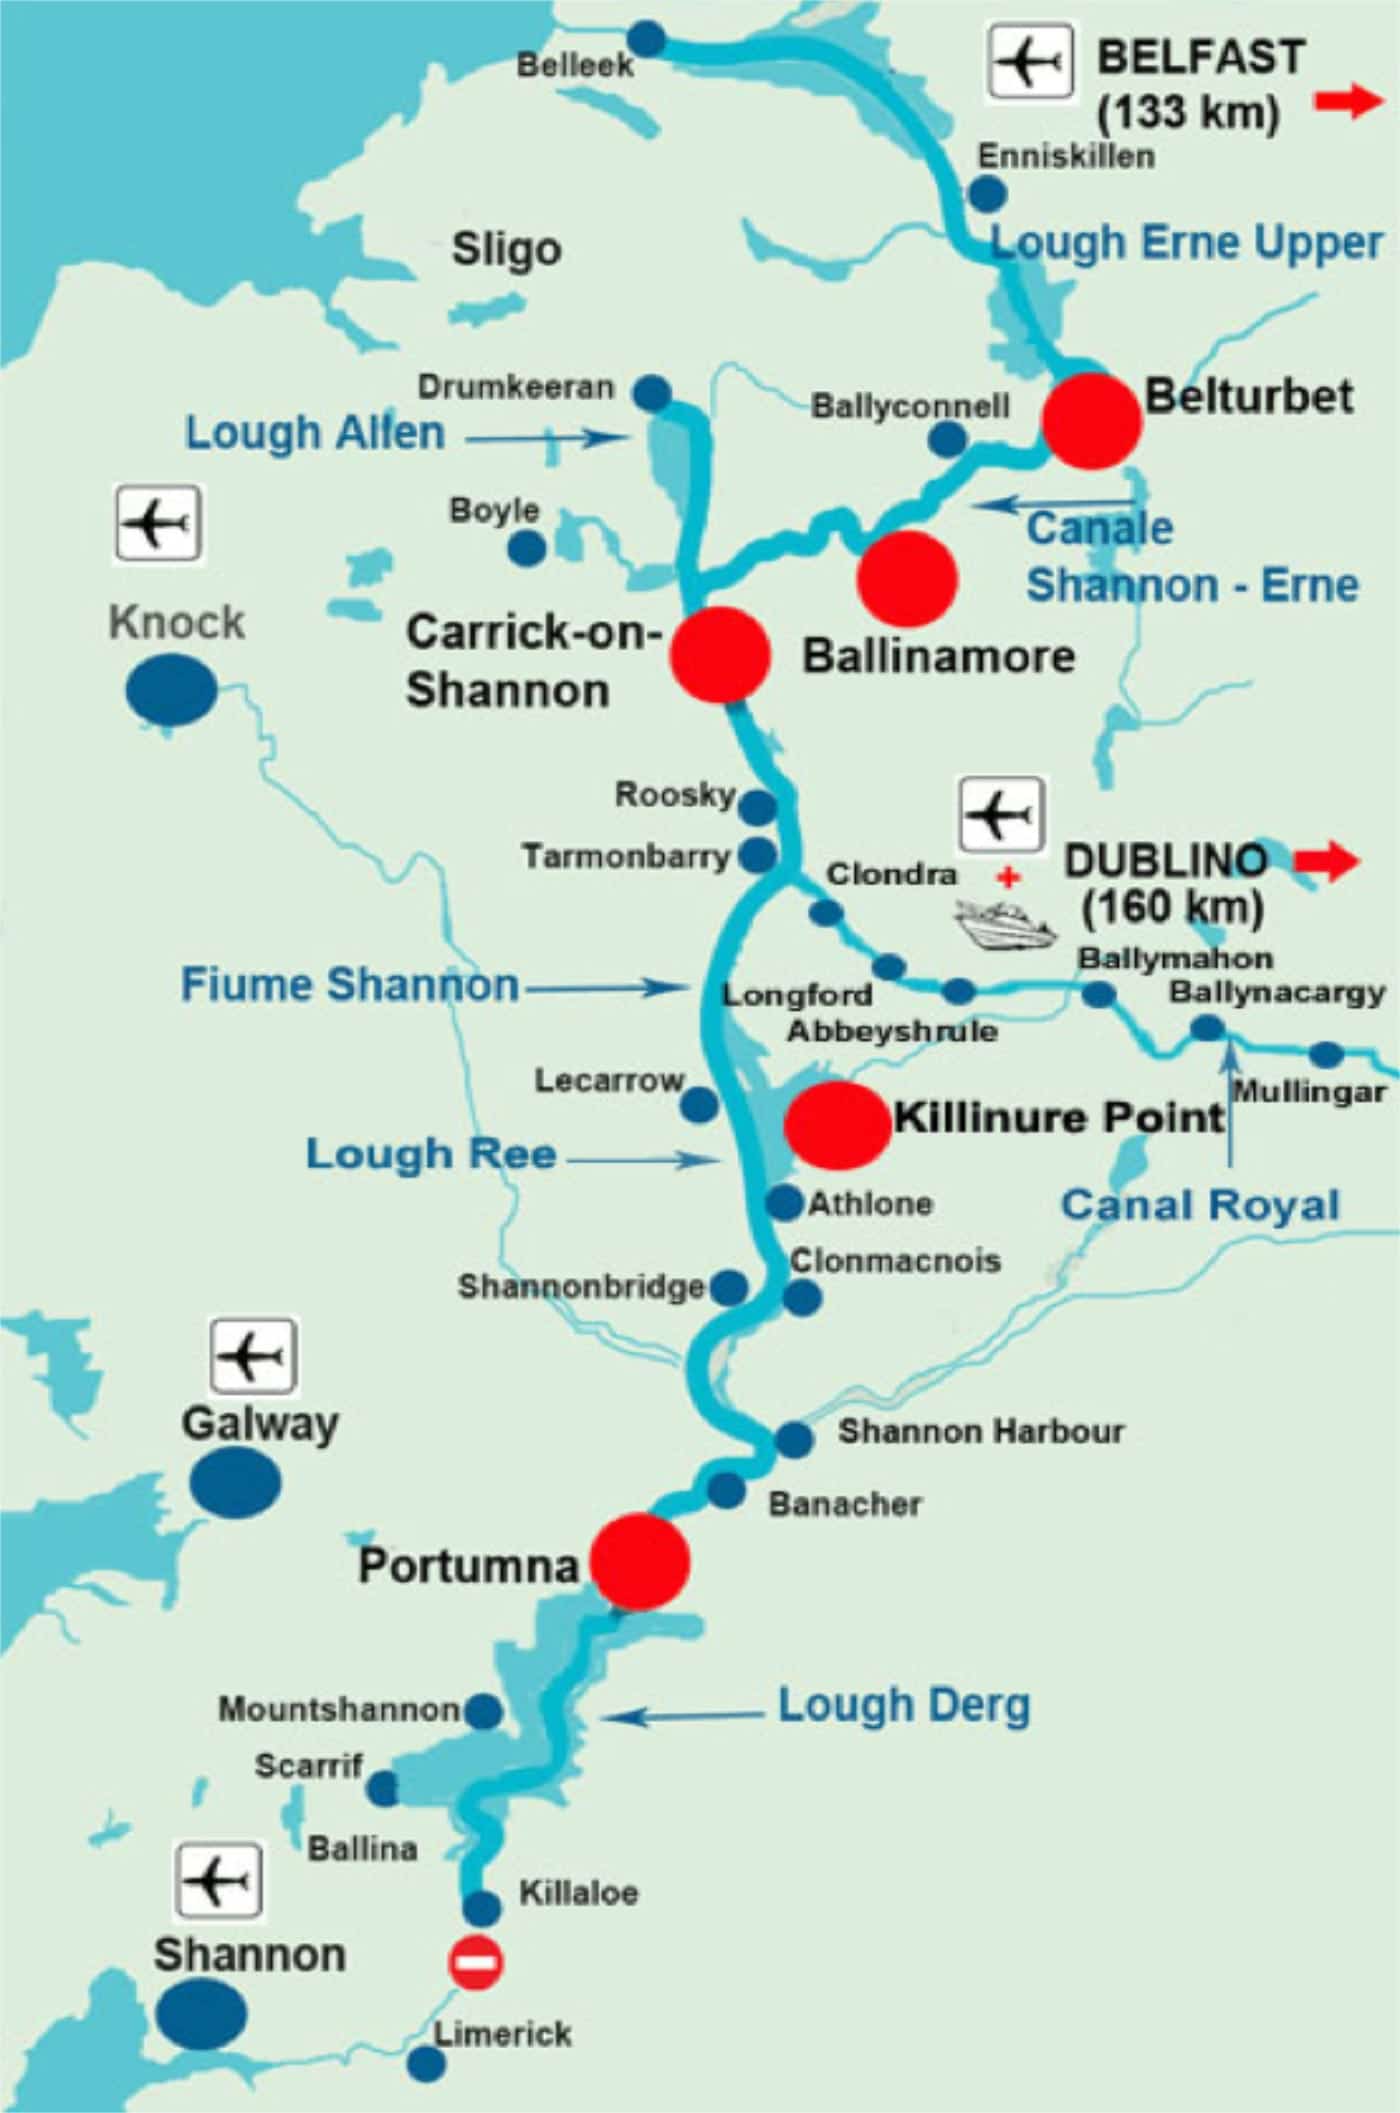 Piano dell'itinerario in houseboat in Irlanda